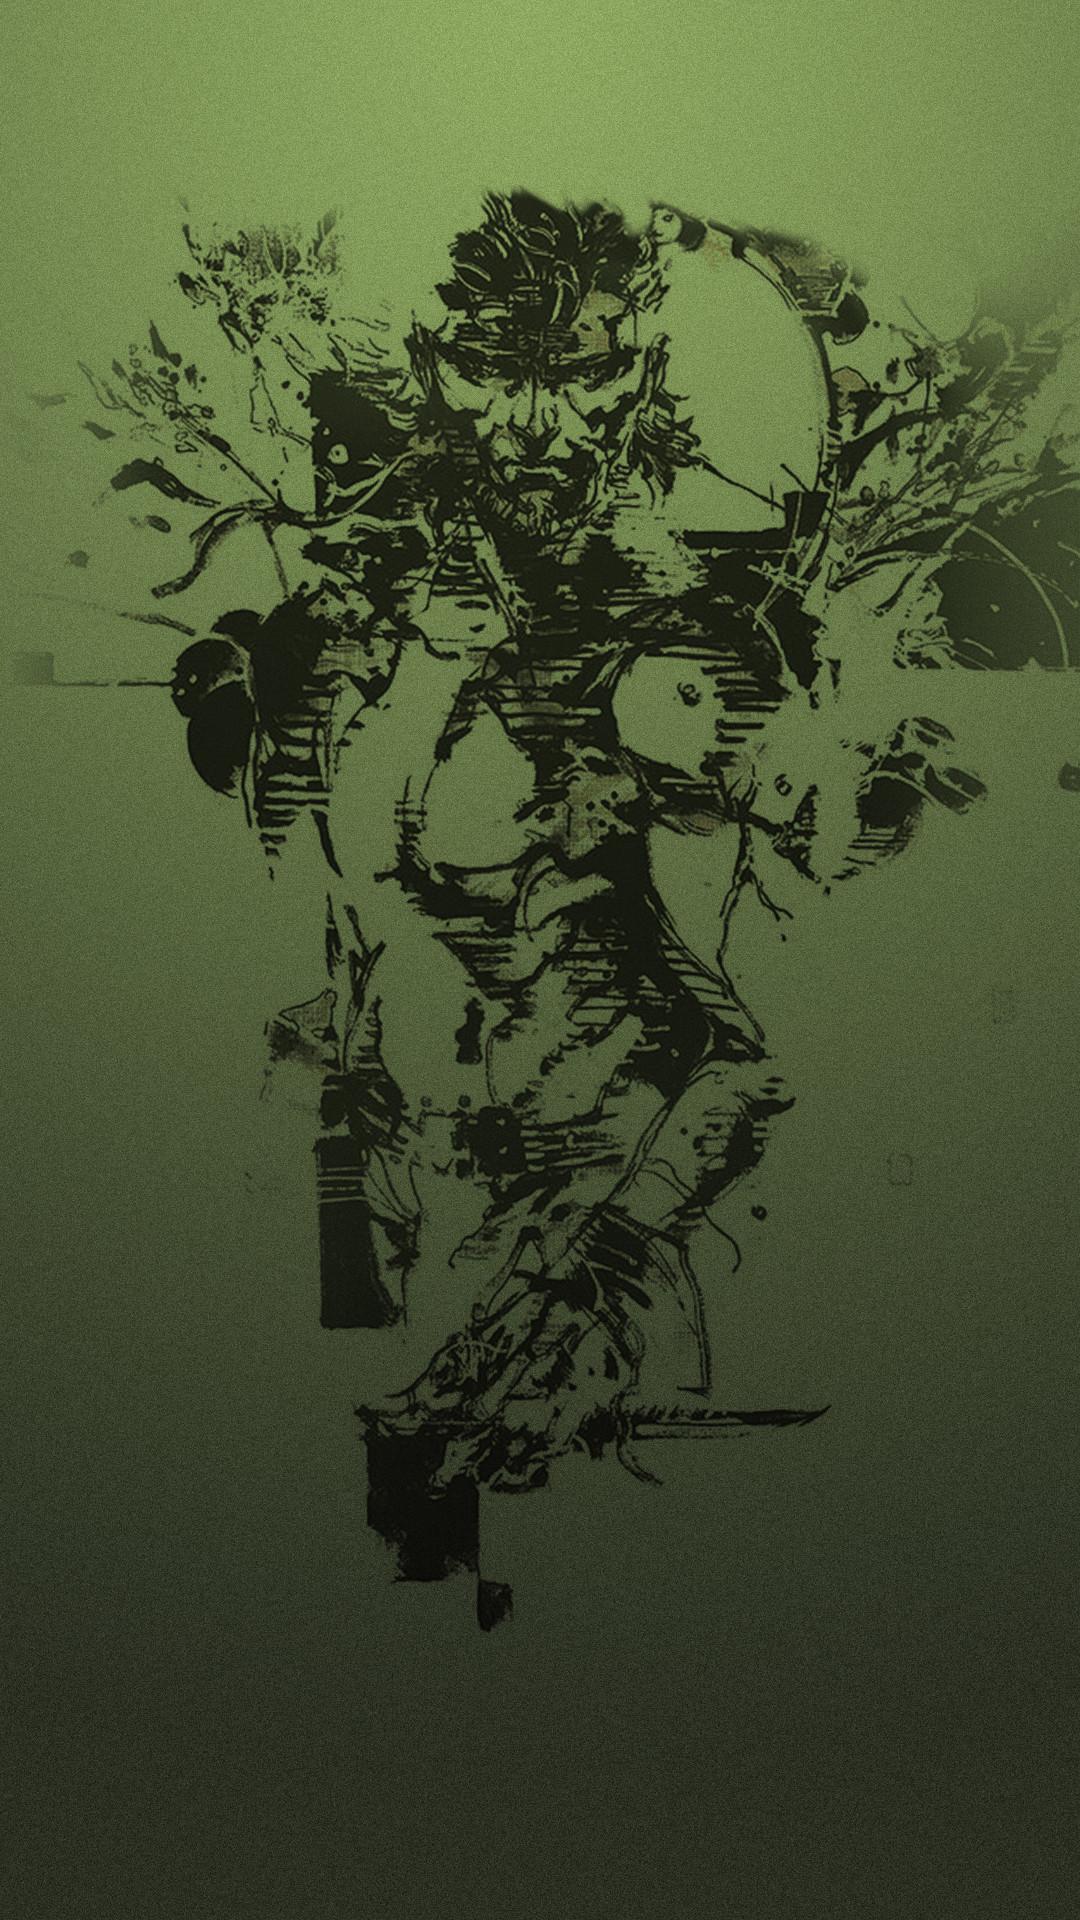 Metal Gear Solid Iphone Wallpapers